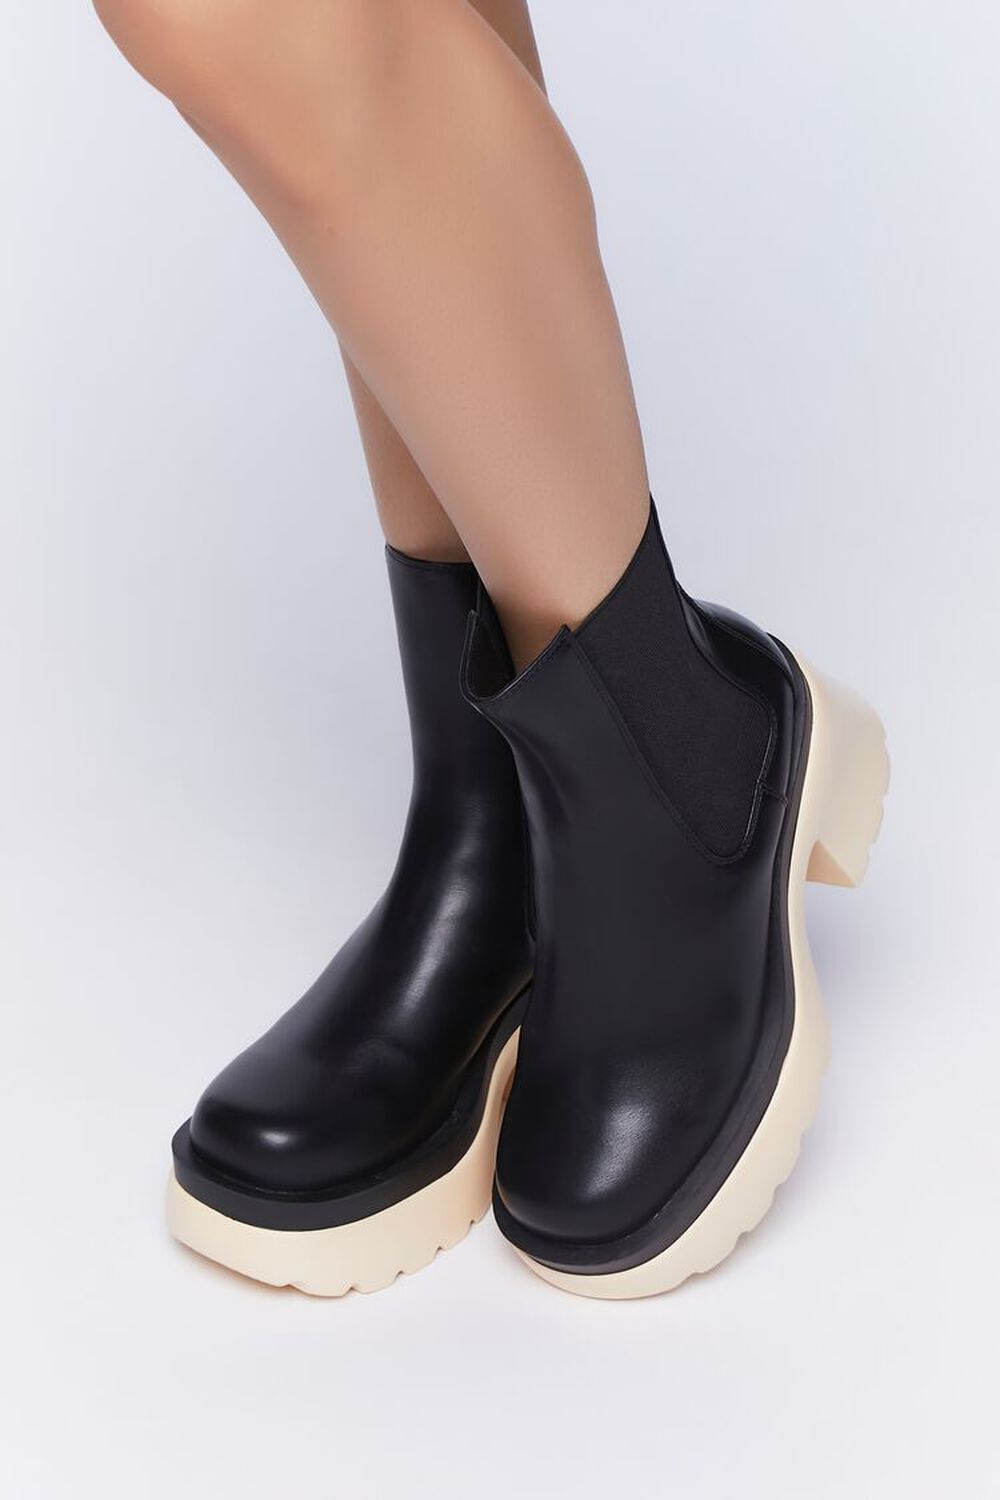 BLACK/CREAM Lug-Sole Chelsea Boots, image 1